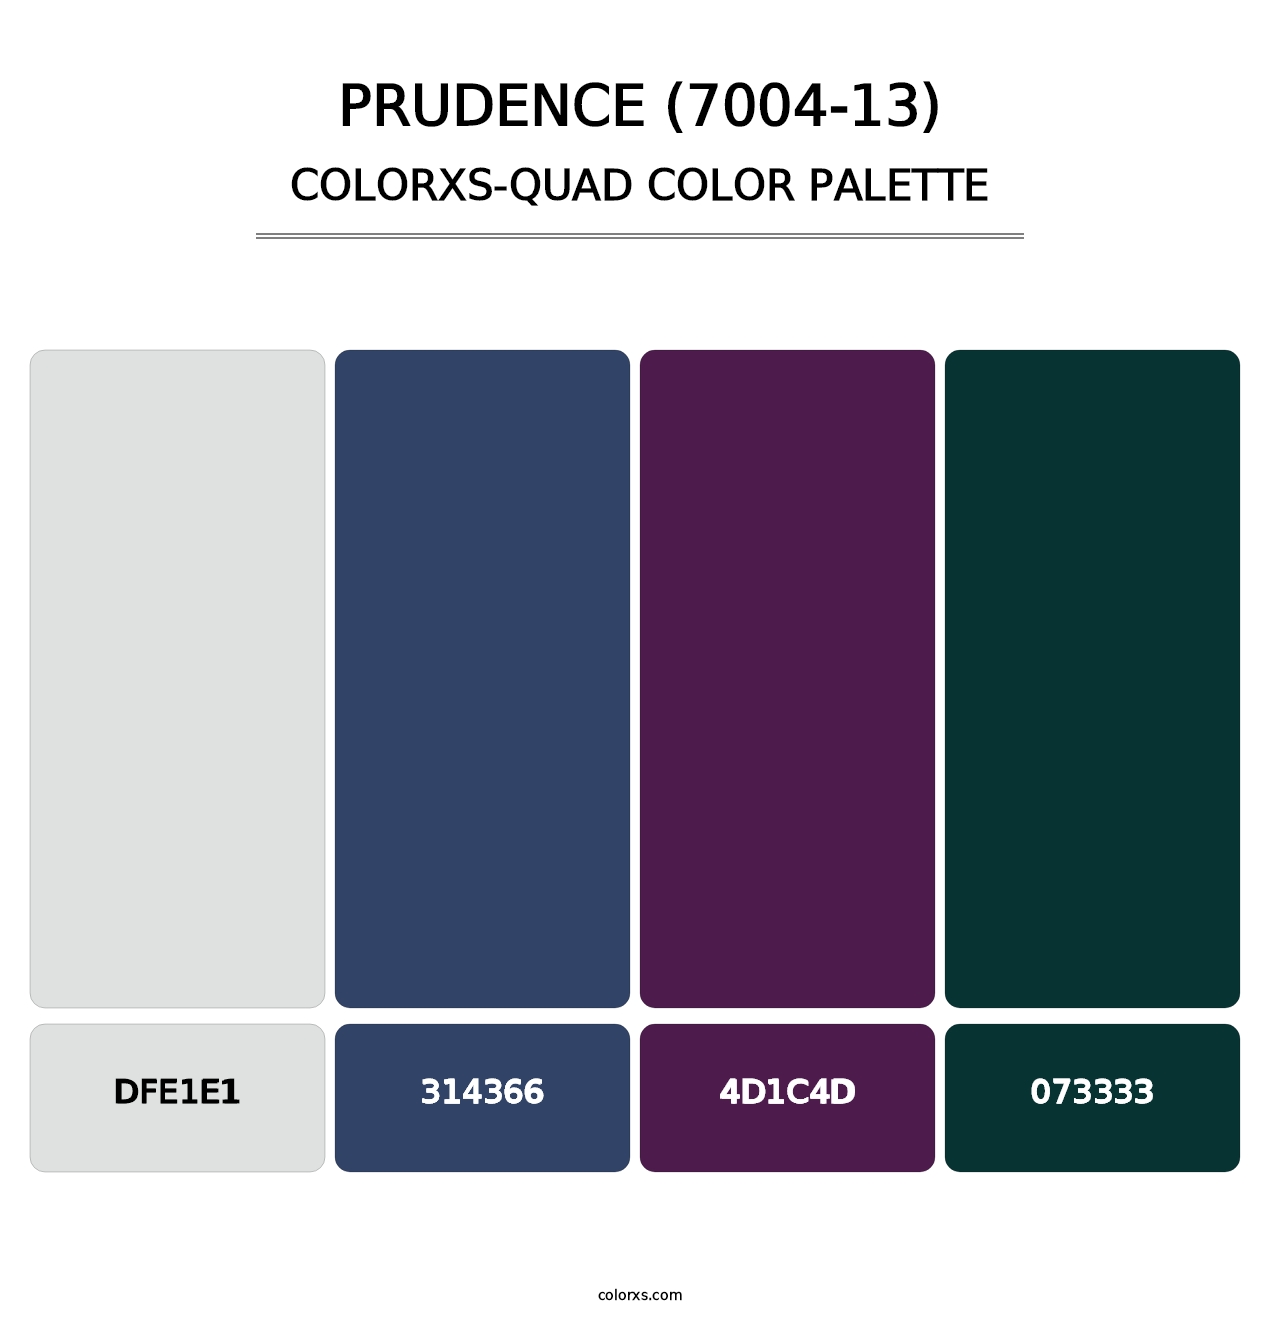 Prudence (7004-13) - Colorxs Quad Palette